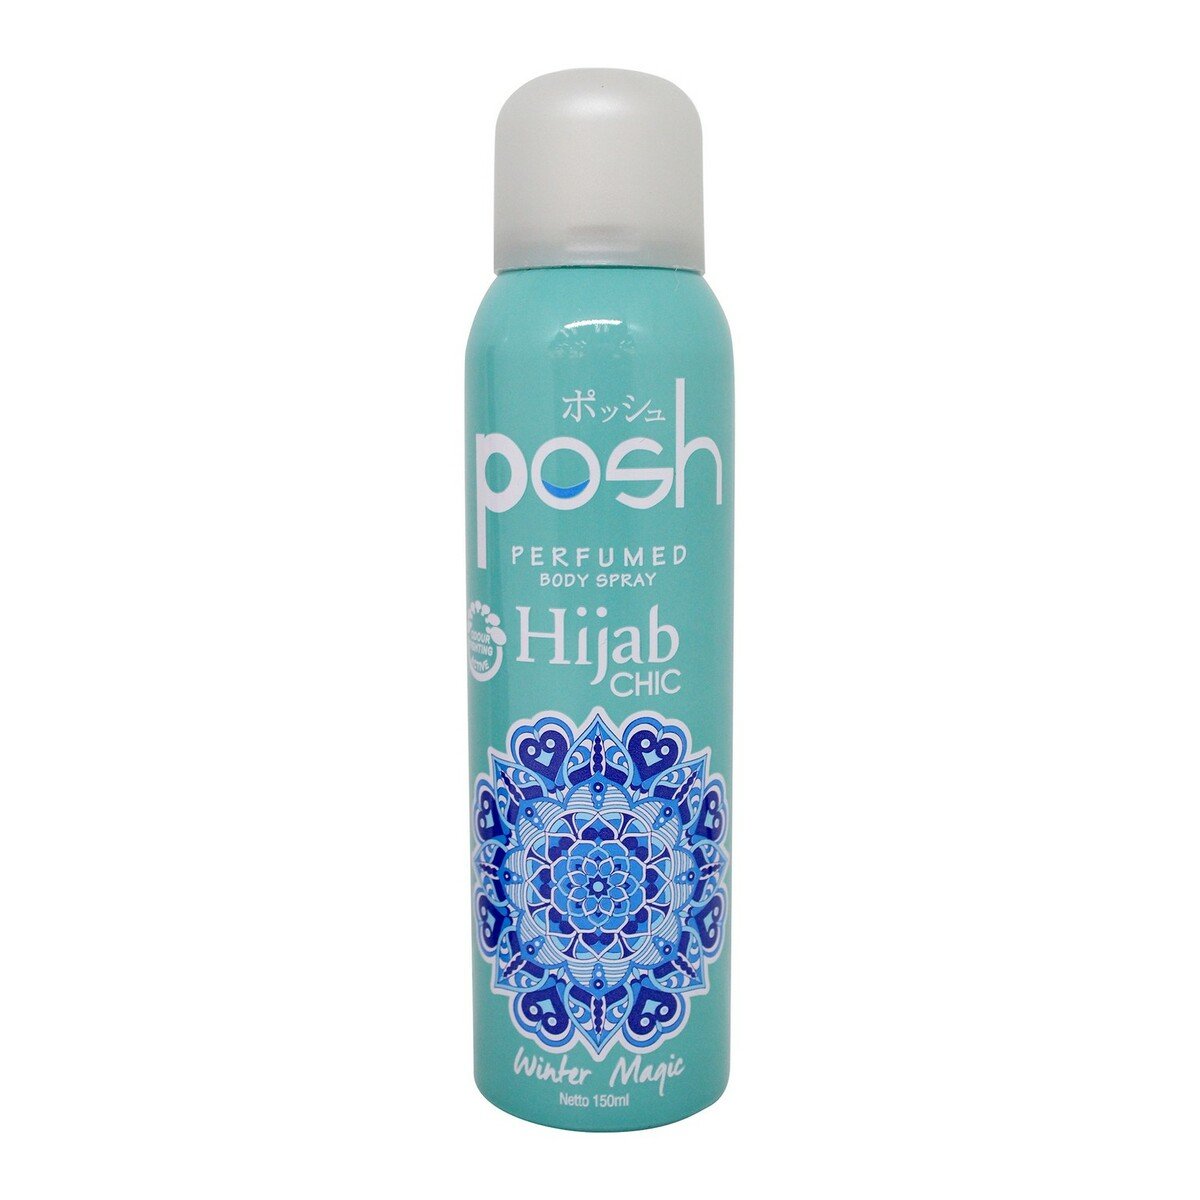 Posh Parfume Body Spray Hijab Winter Magic 150ml